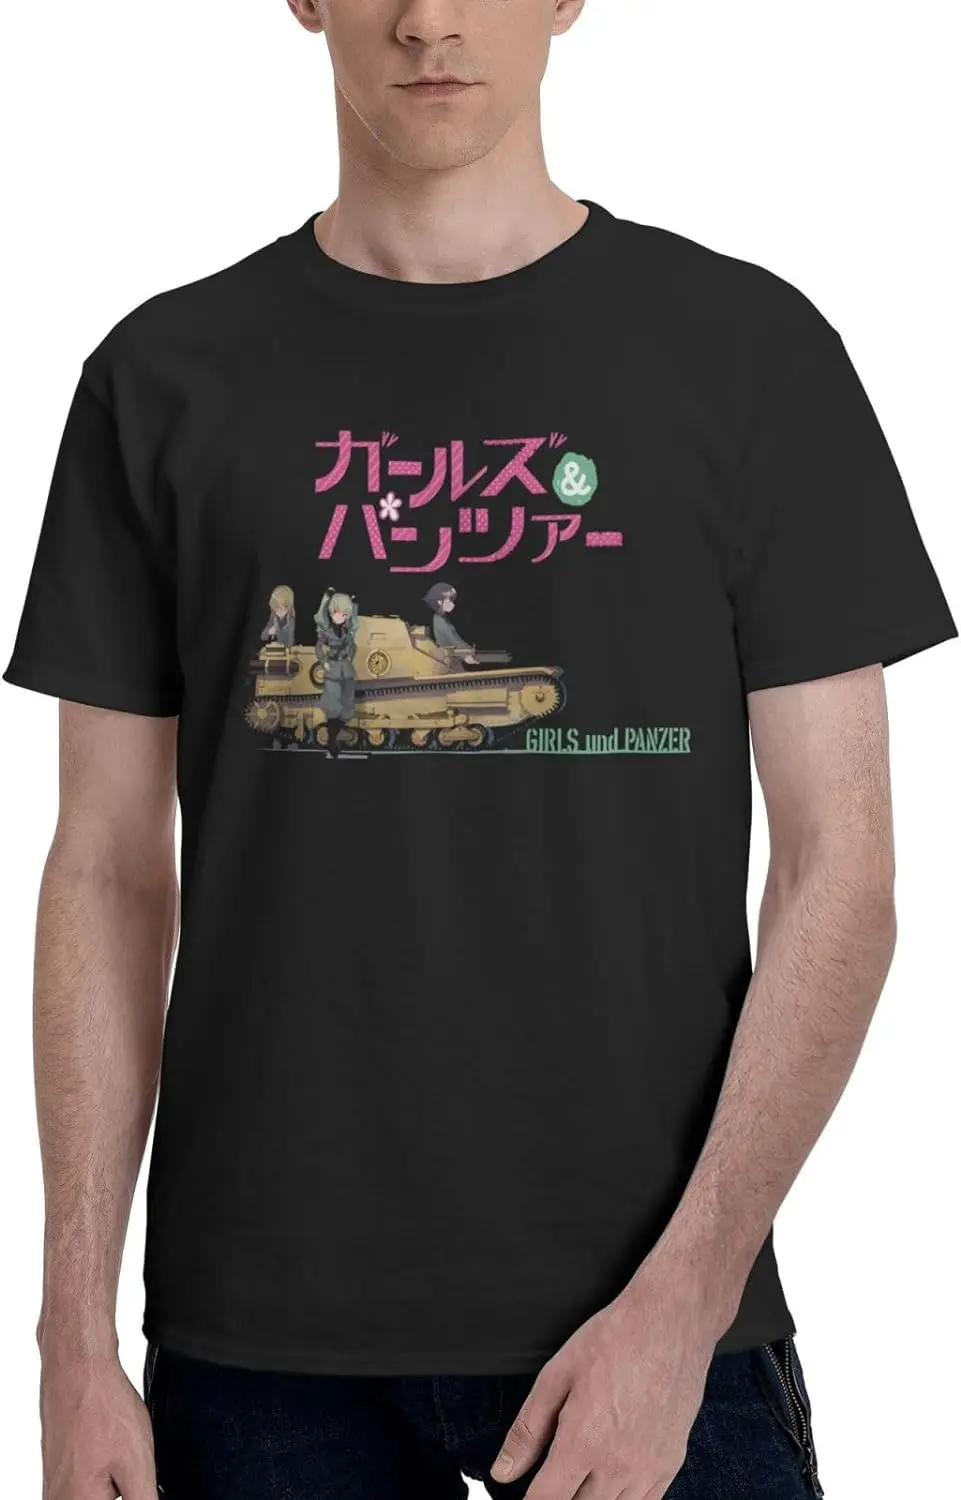 

Anime Girls Und Panzer T Shirt Man's Summer Round Neck Shirts Casual Short Sleeves Tee Black